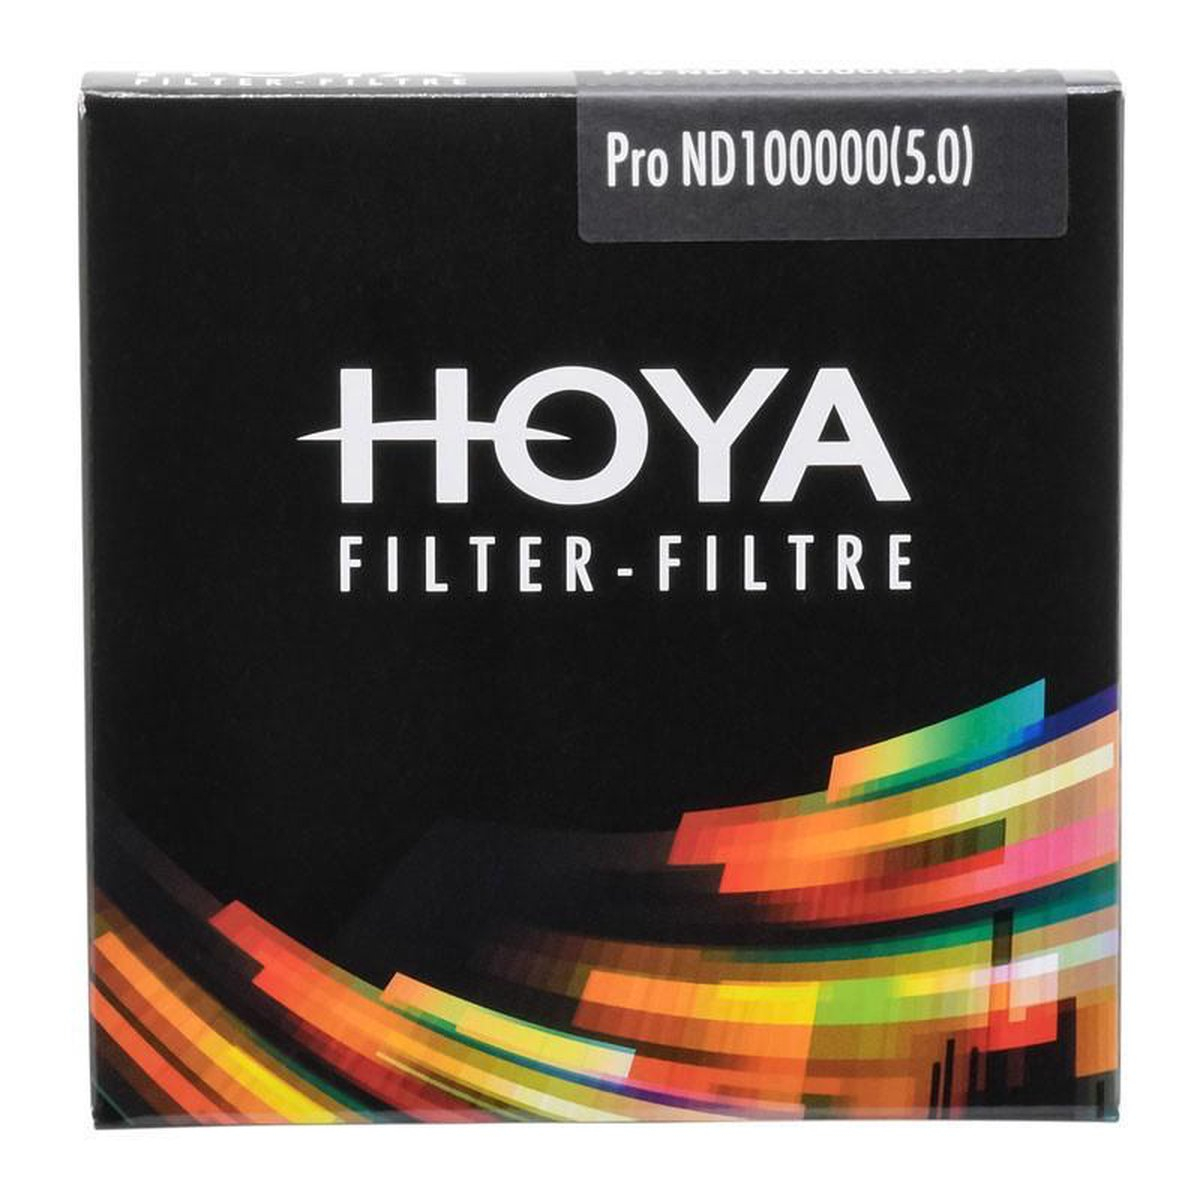 Hoya ProND100000 (5.0) - 77mm